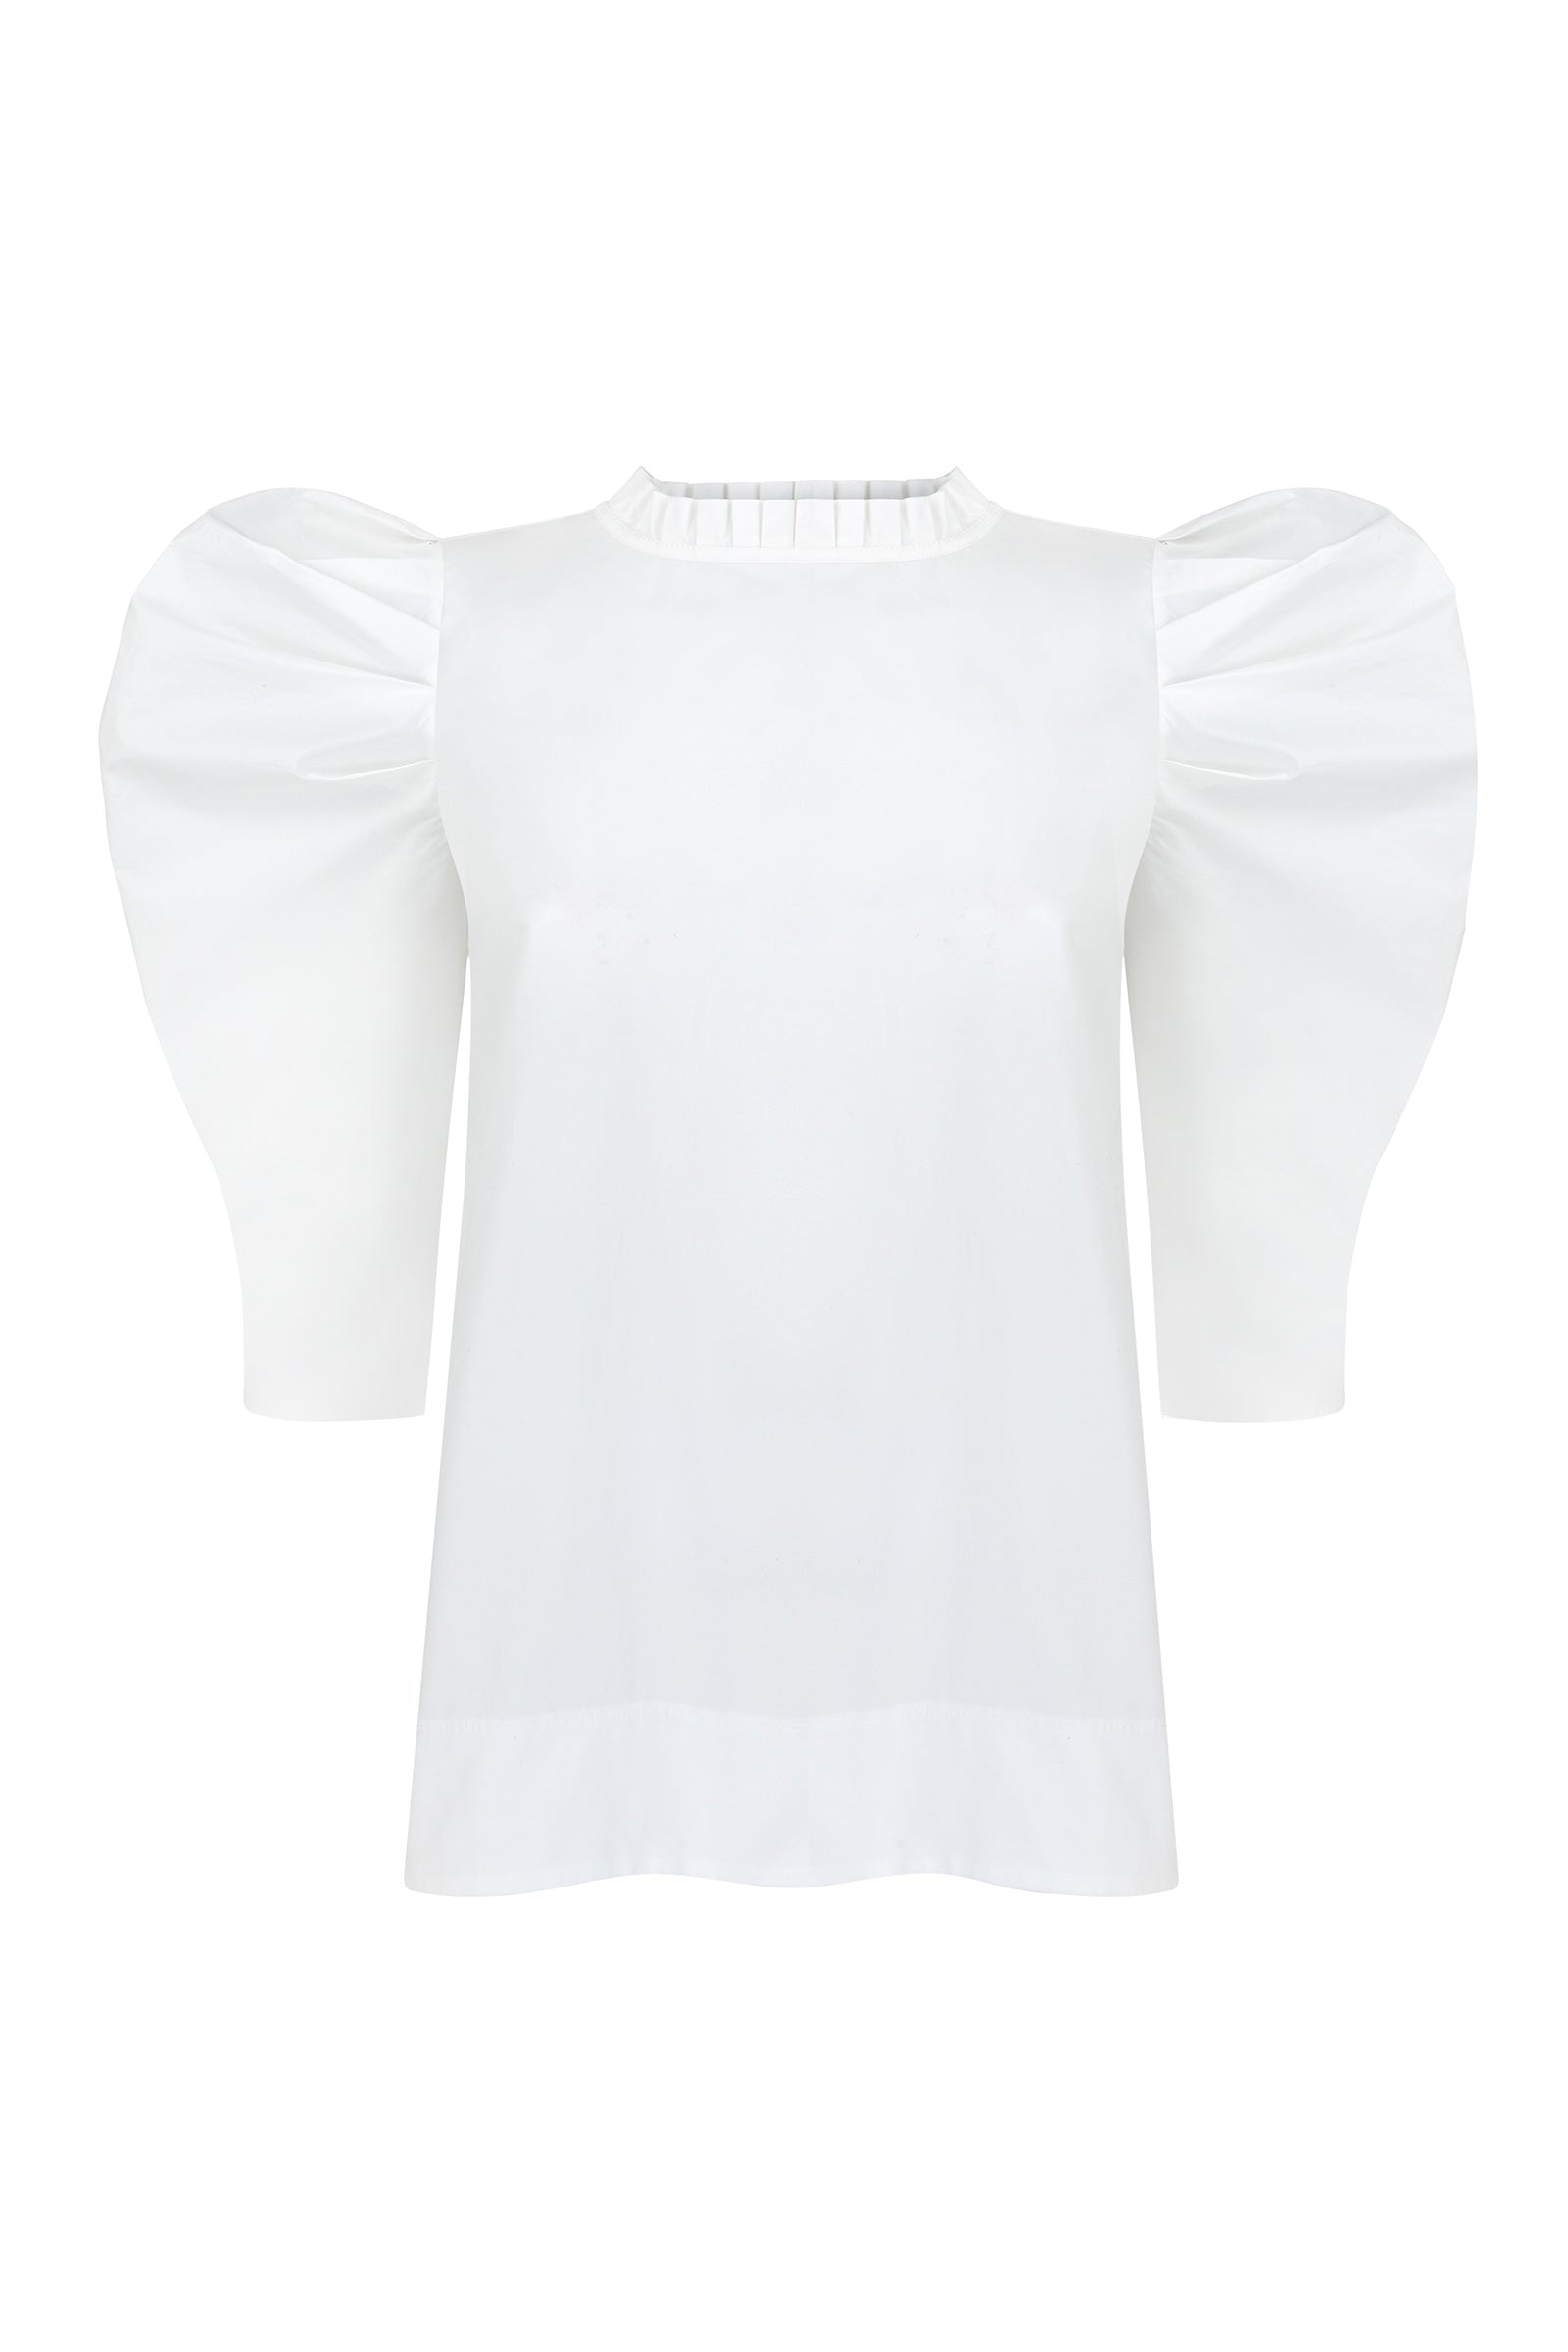 Shop Monica Nera Women's Irina Shirt - White